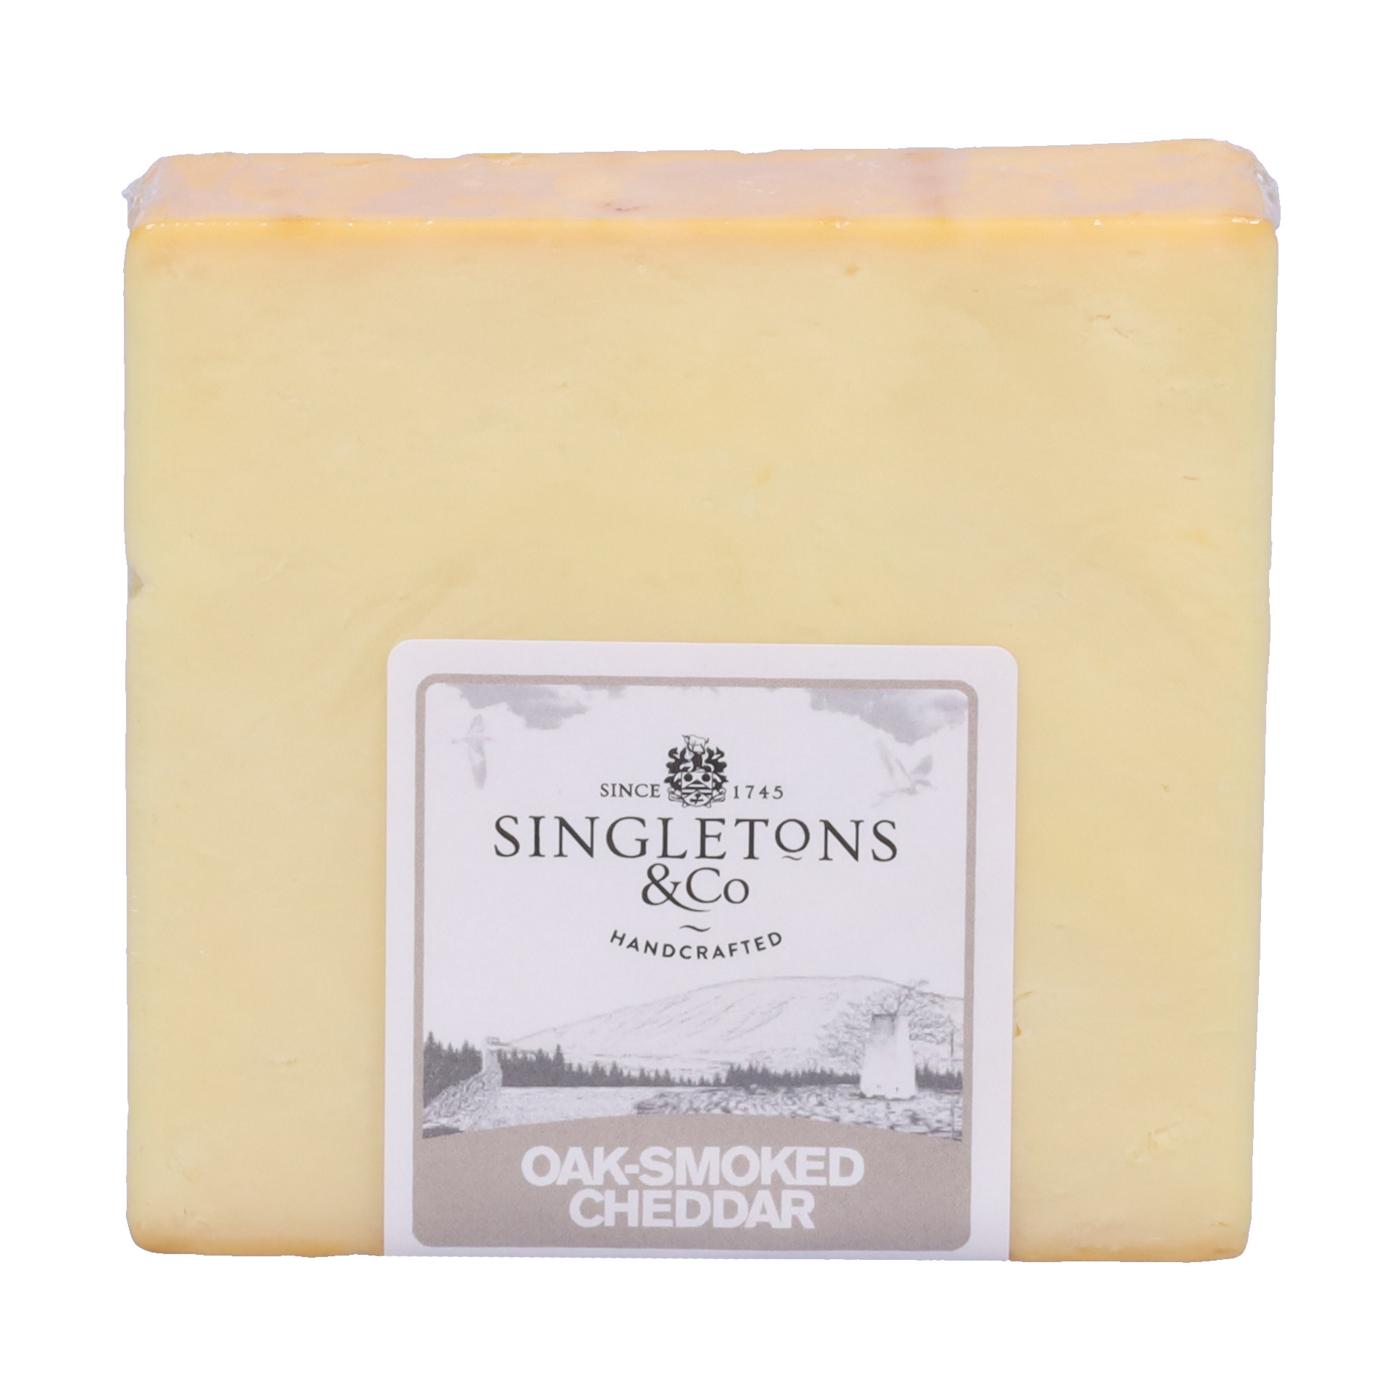 Singleton's English Oak Smoked Cheddar Cheese; image 1 of 2